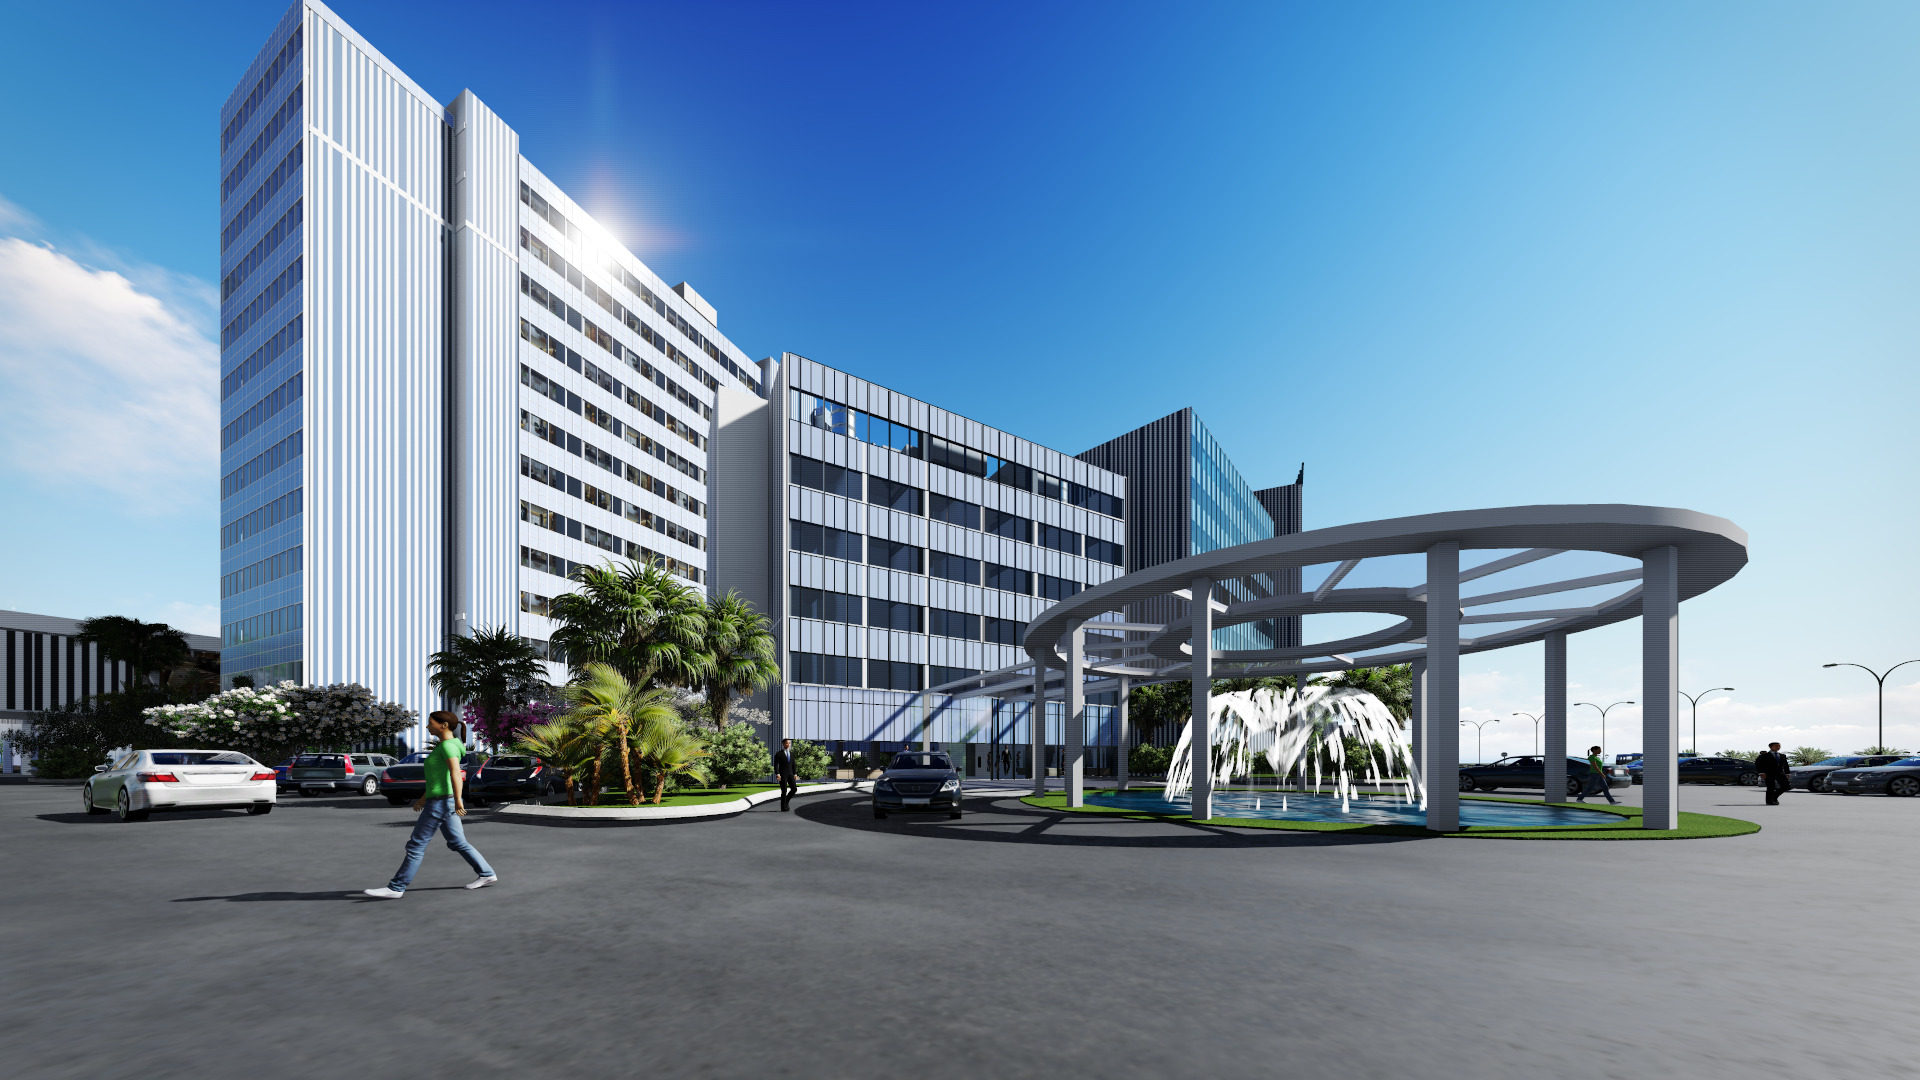 Noi Bai Hotel Complex Project